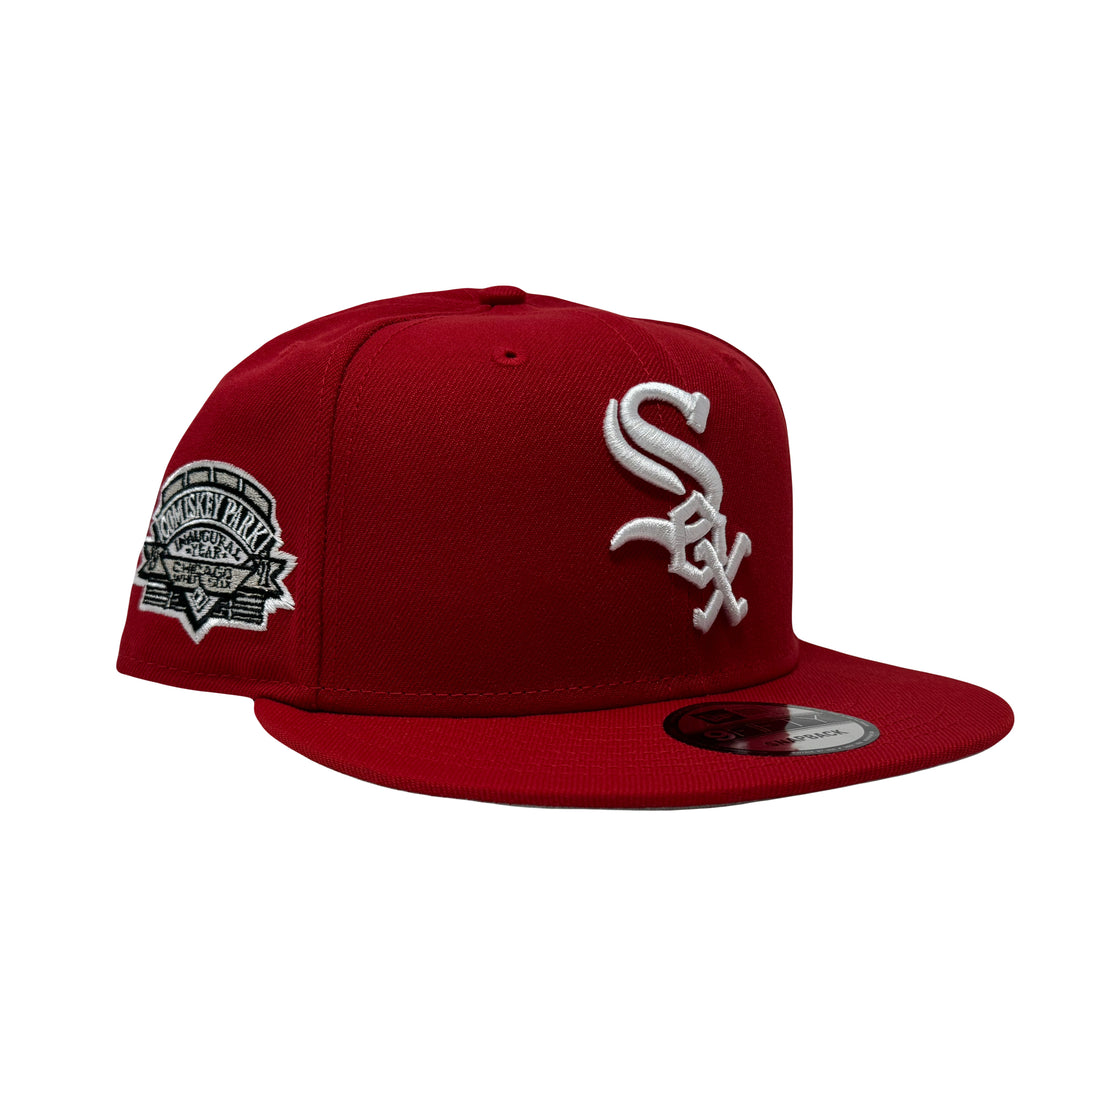 Chicago White Sox Comiskey Park Red New Era Snapback Hat